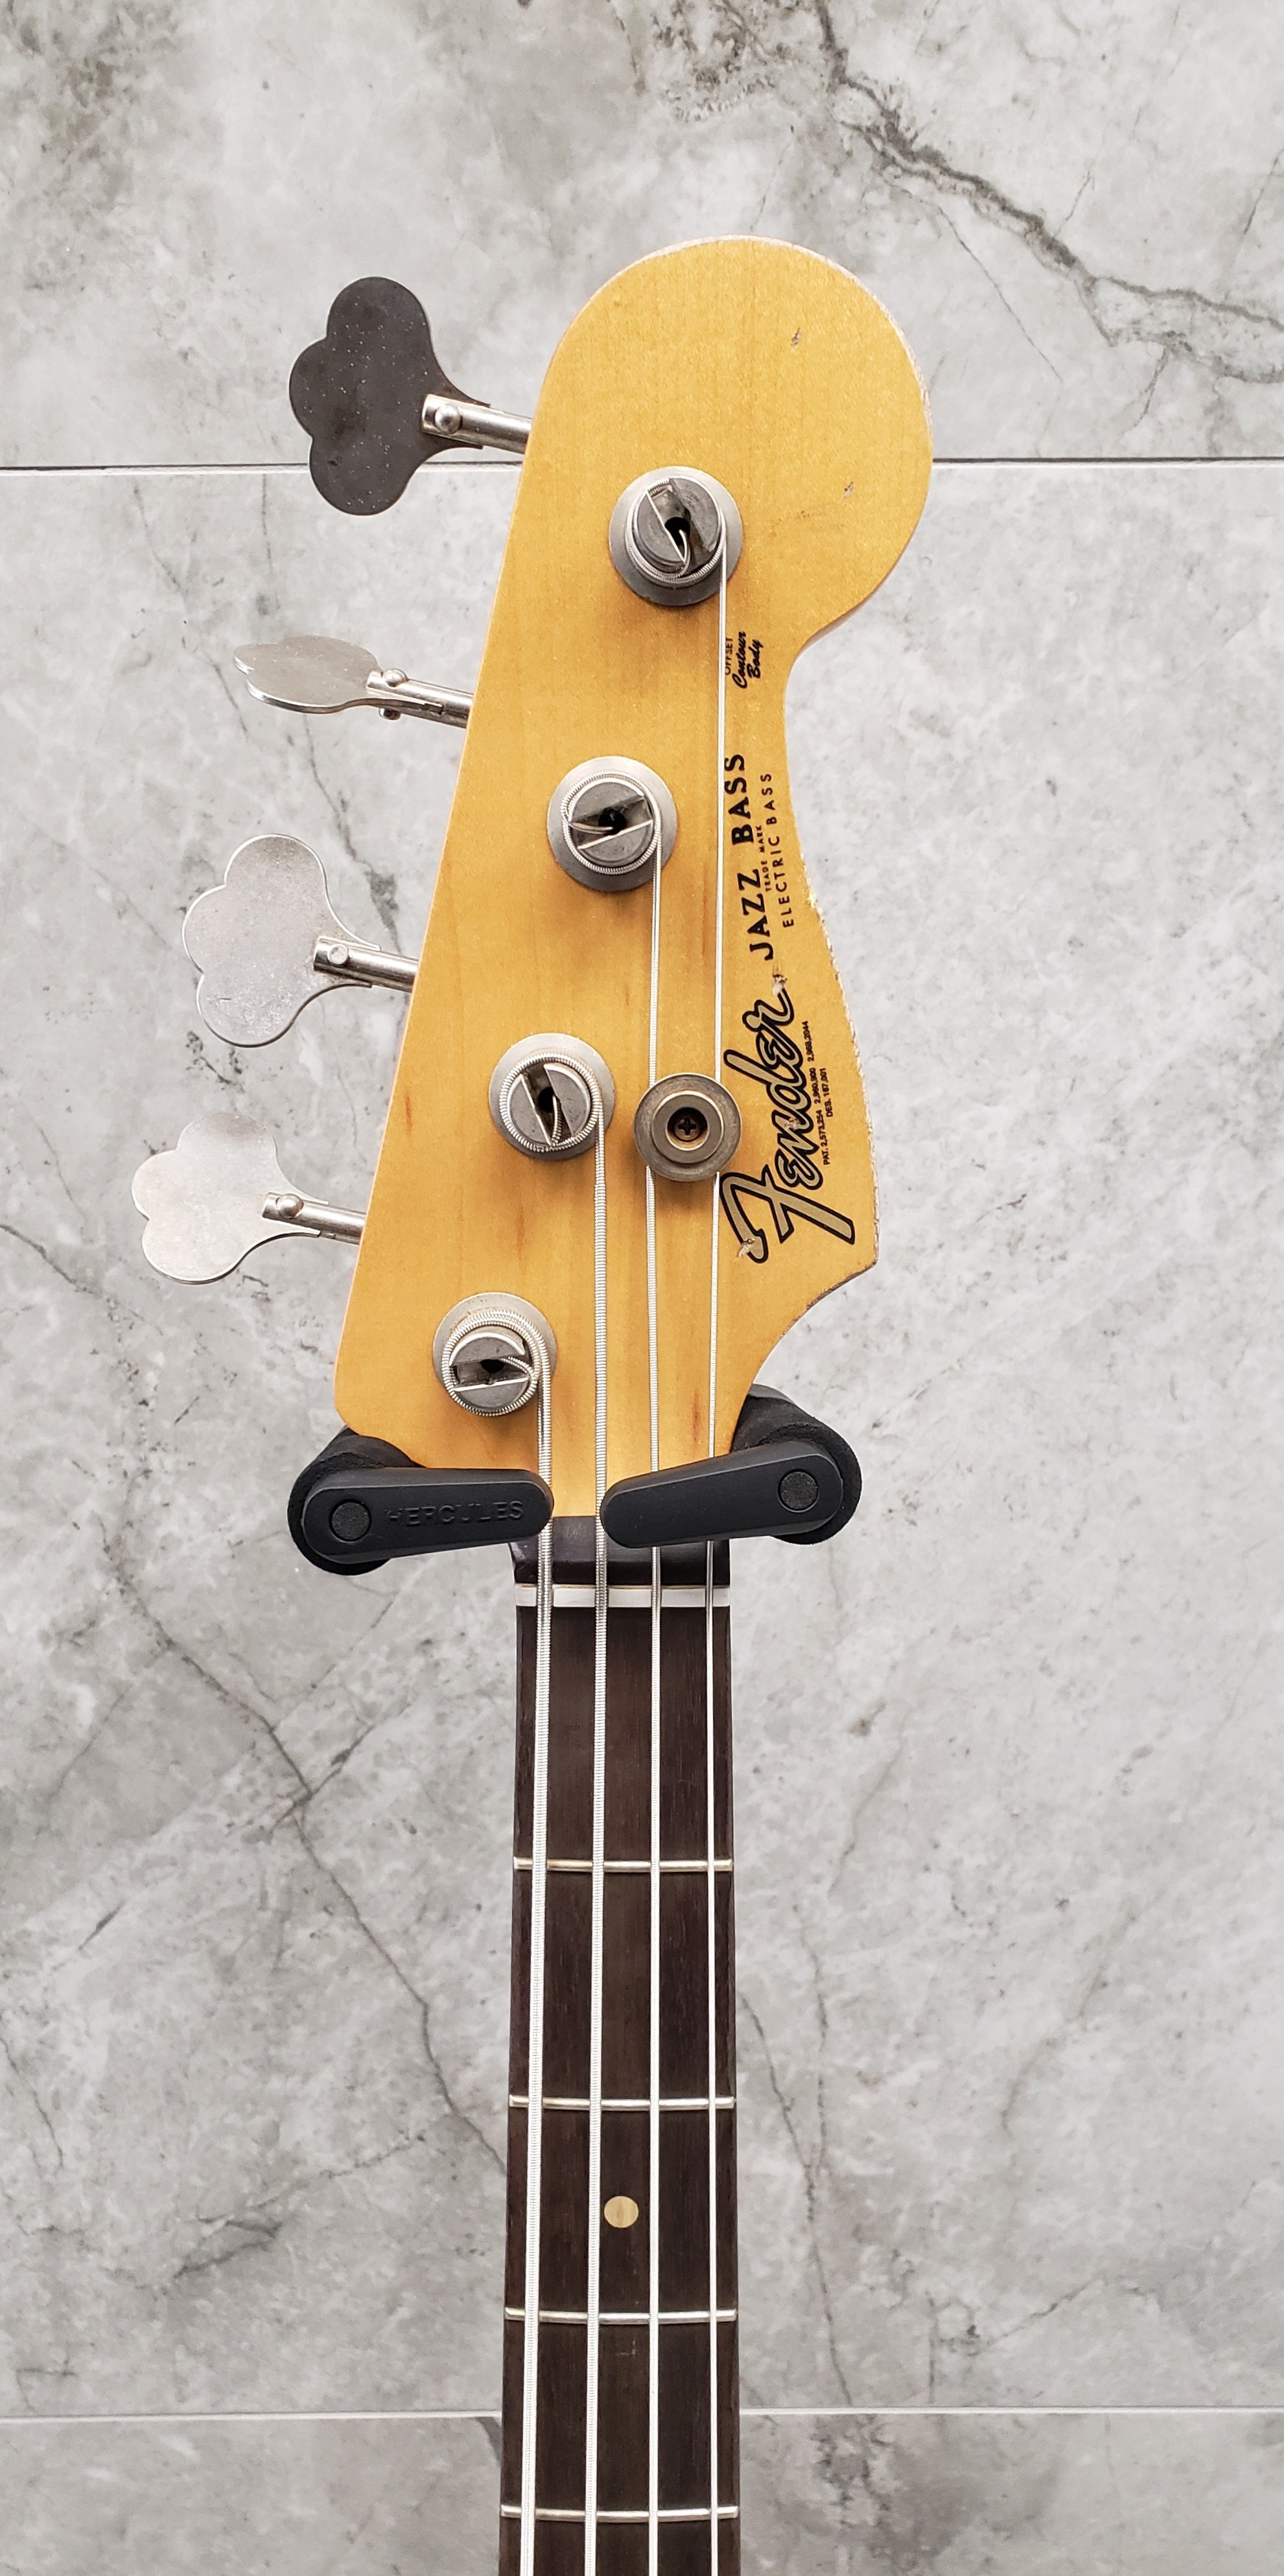 Fender Flea Jazz Bass Rosewood Fingerboard Roadworn Shell Pink 0141020356 SERIAL NUMBER MX22302831 - 8.6 LBS